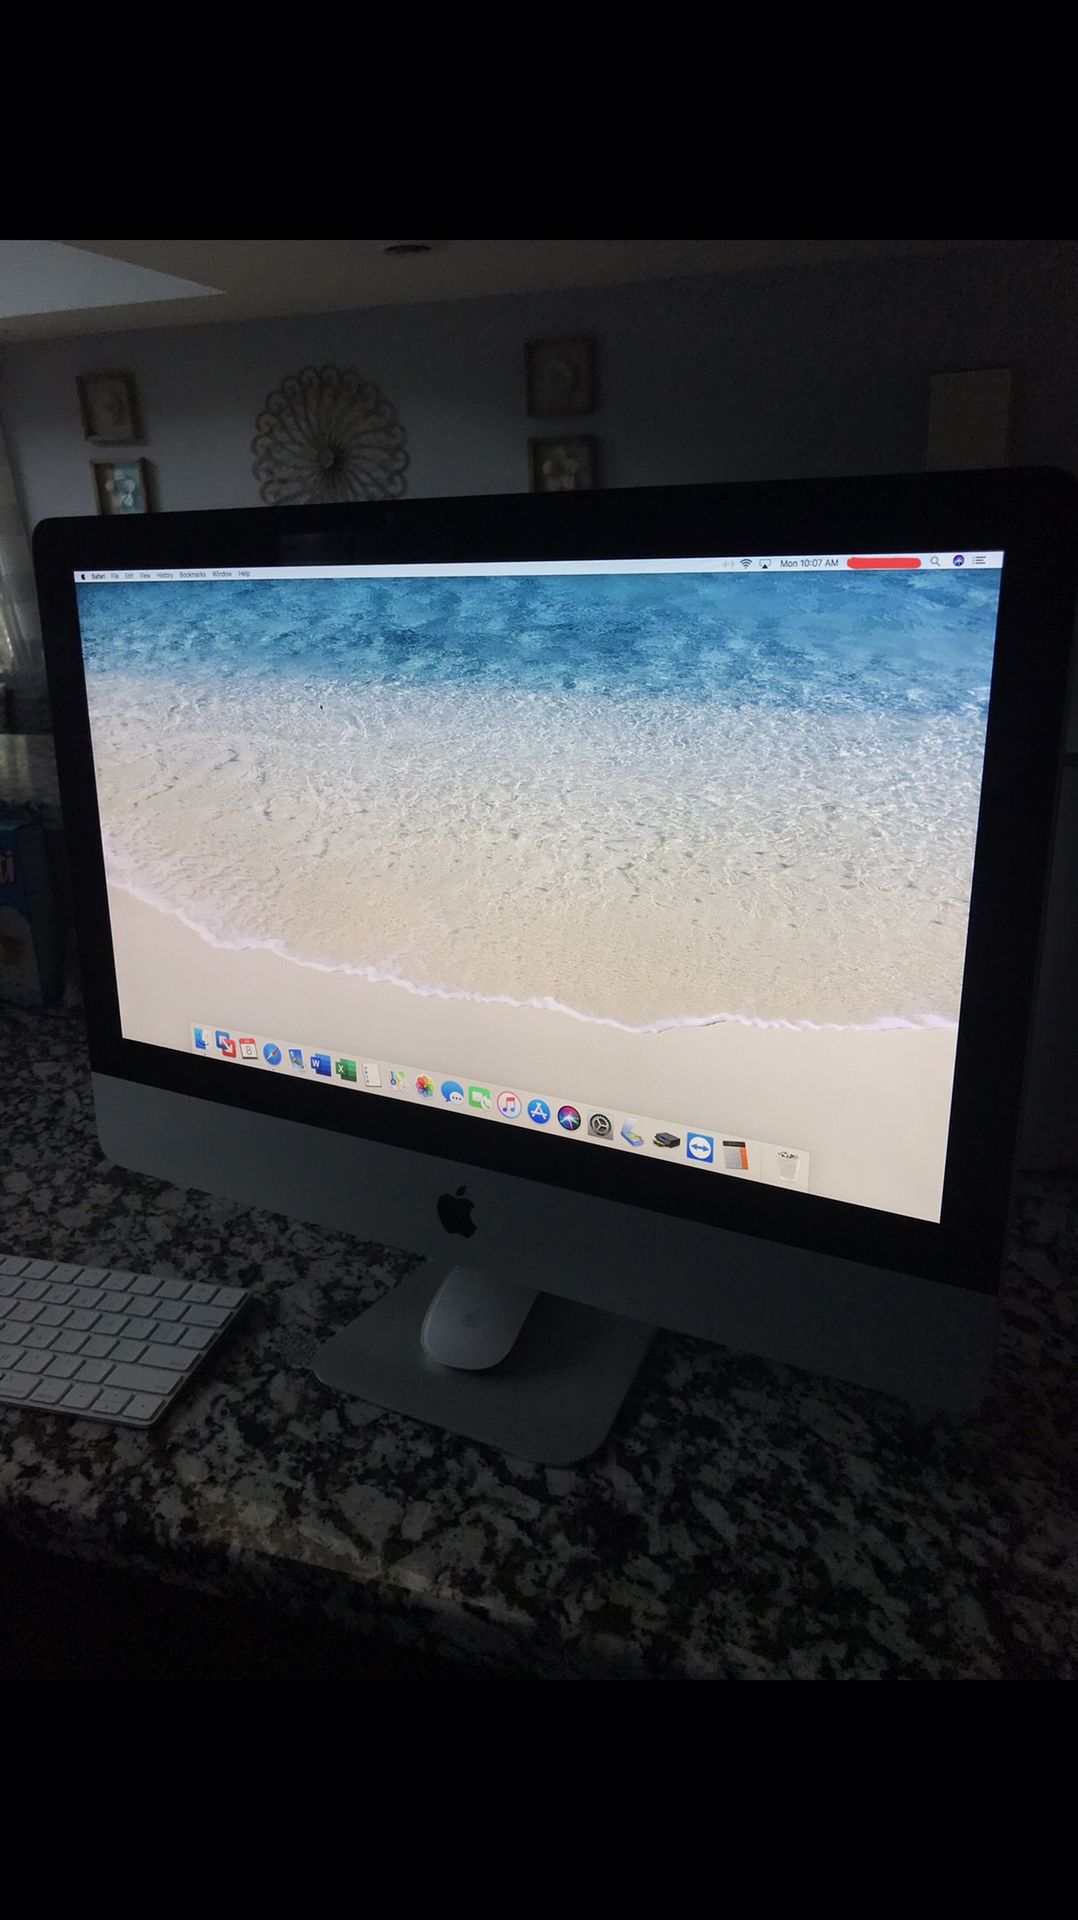 iMac w/wireless keyboard and mouse